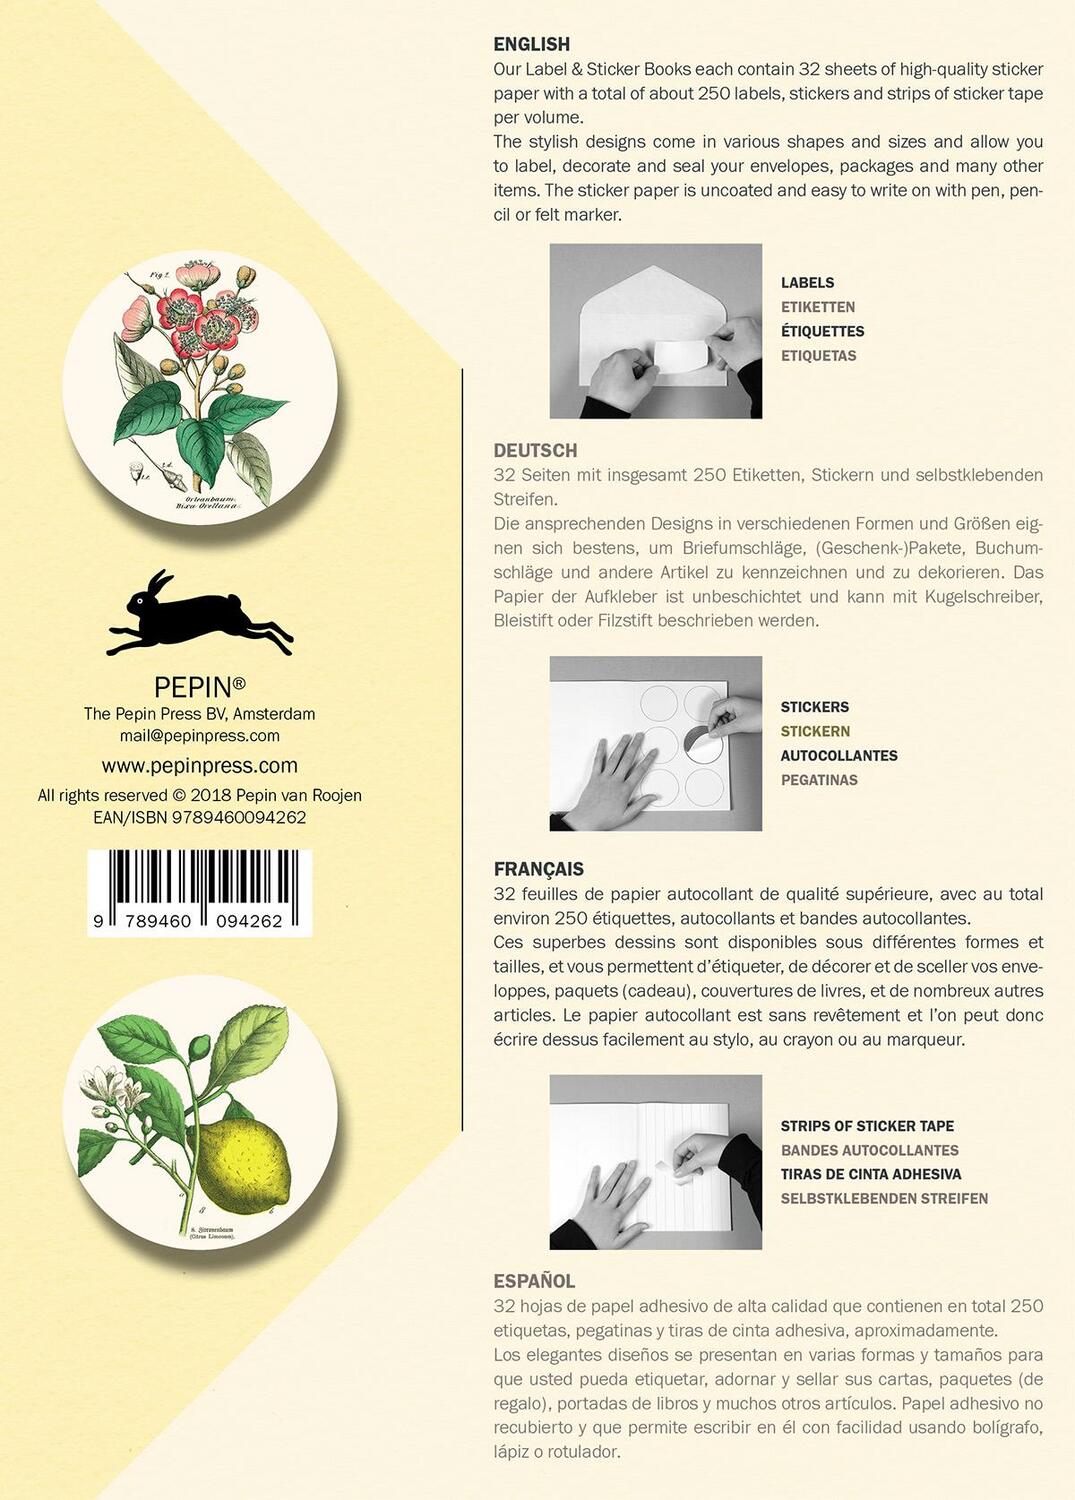 Bild: 9789460094262 | Flora - Label, Sticker & Tape Books | Stück | Label & Sticker Books